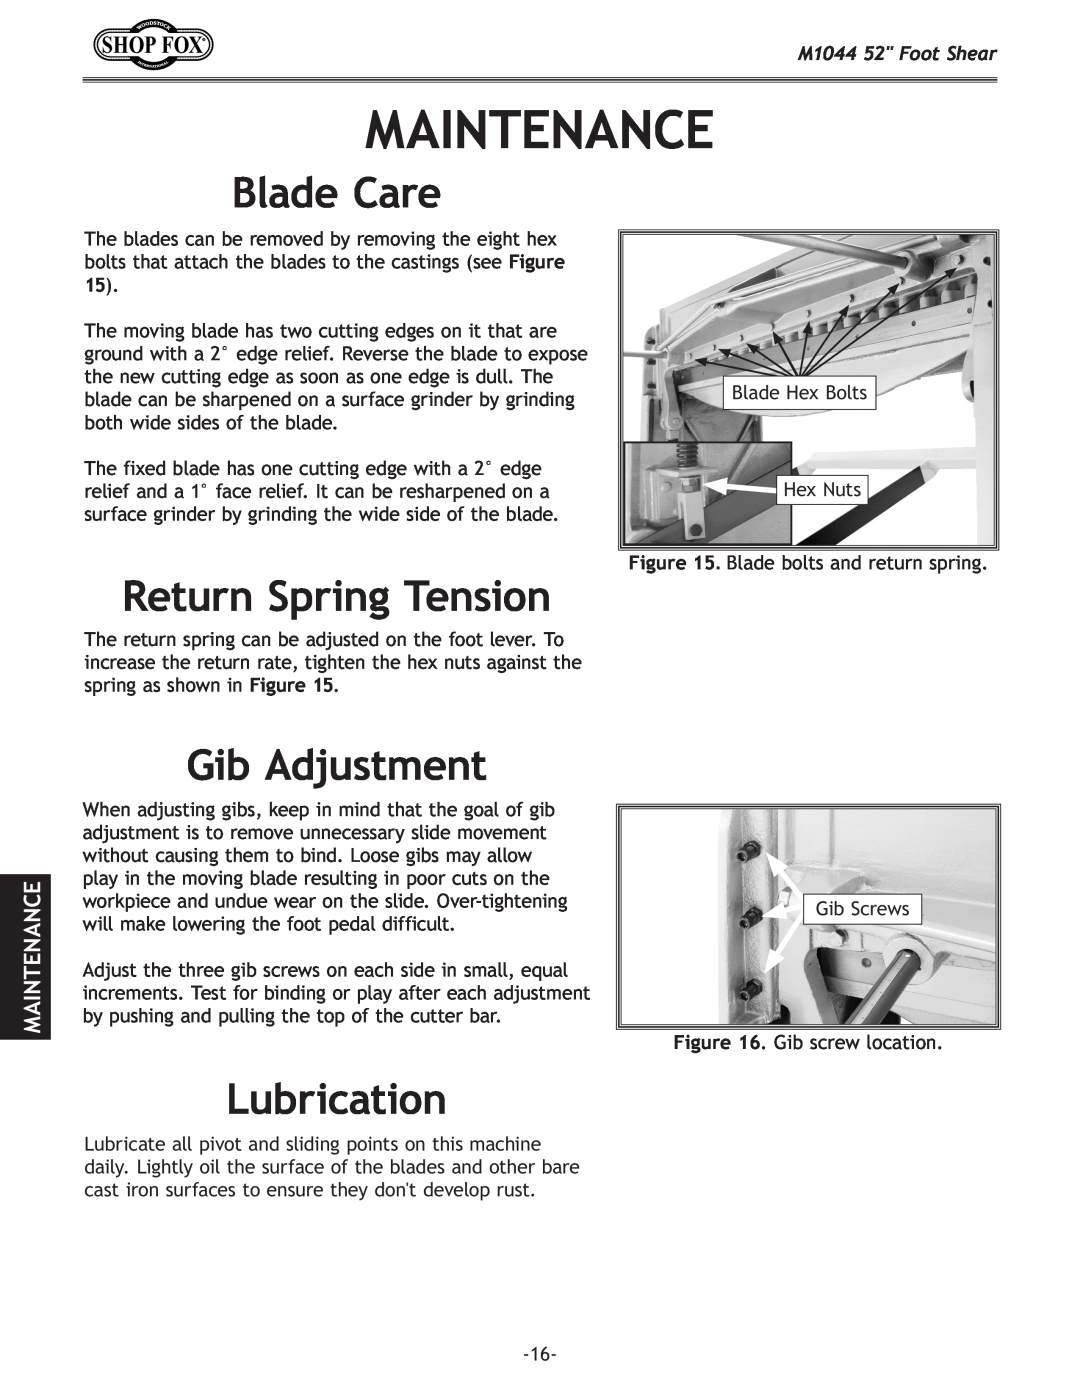 Woodstock manual Maintenance, Blade Care, Return Spring Tension, Gib Adjustment, Lubrication, M1044 52 Foot Shear 